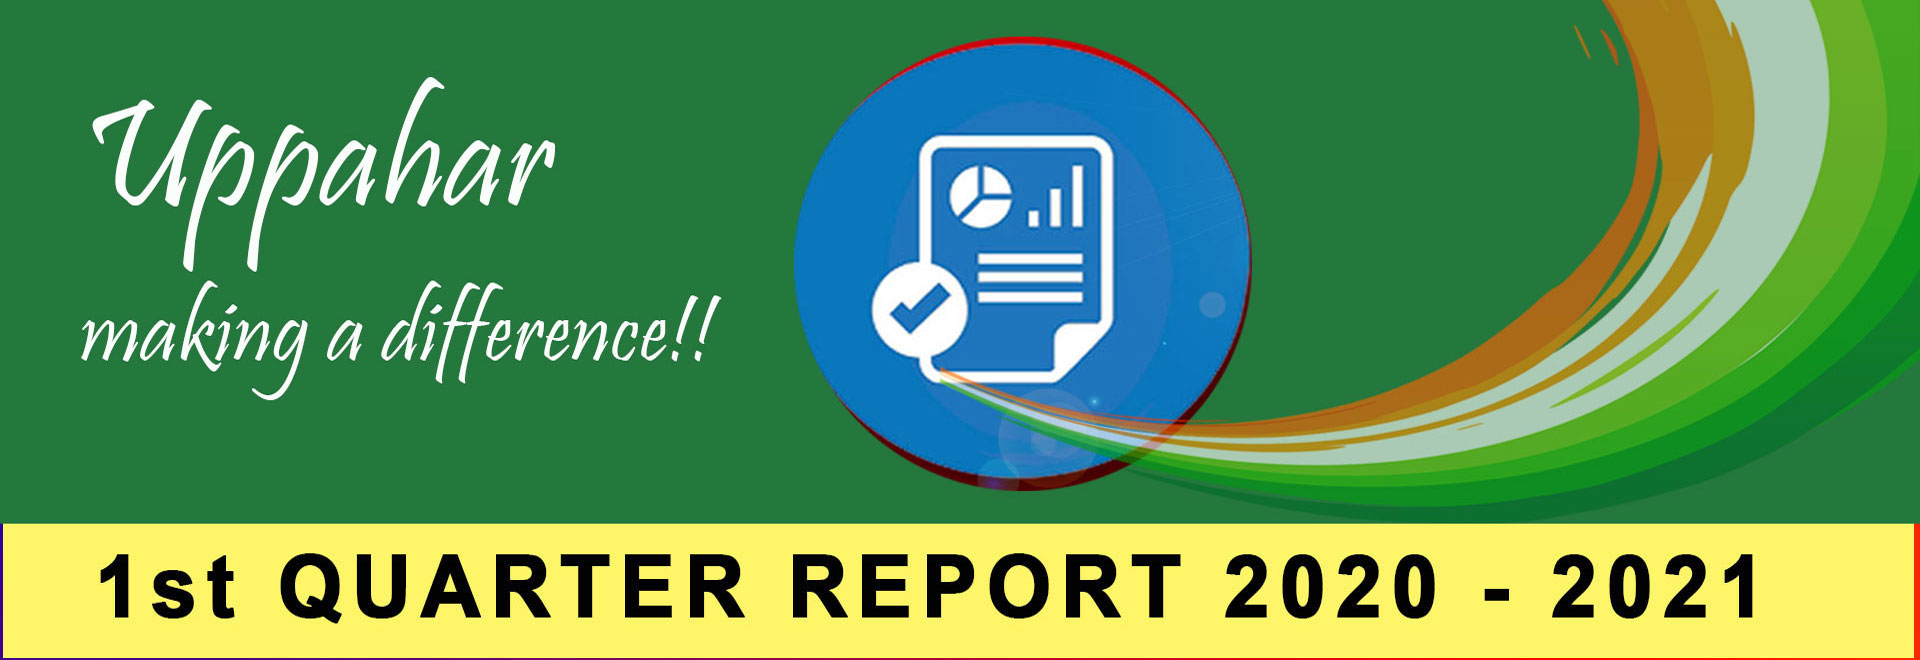 Uppahar India 1st Quarterly Report 2020-21